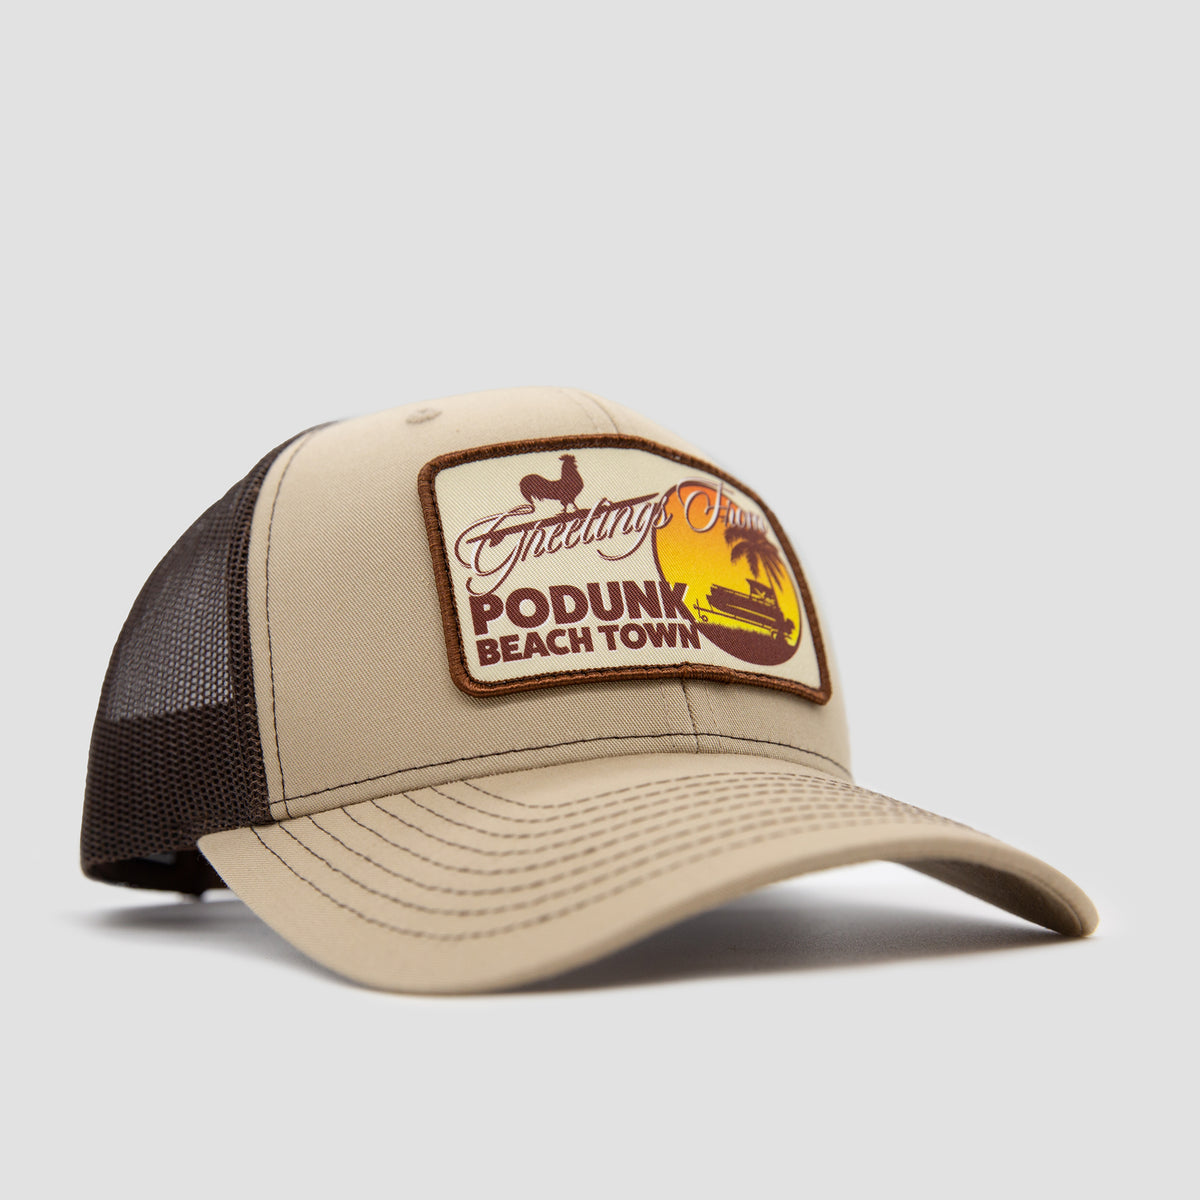 Podunk Beach Town Snapback Hat